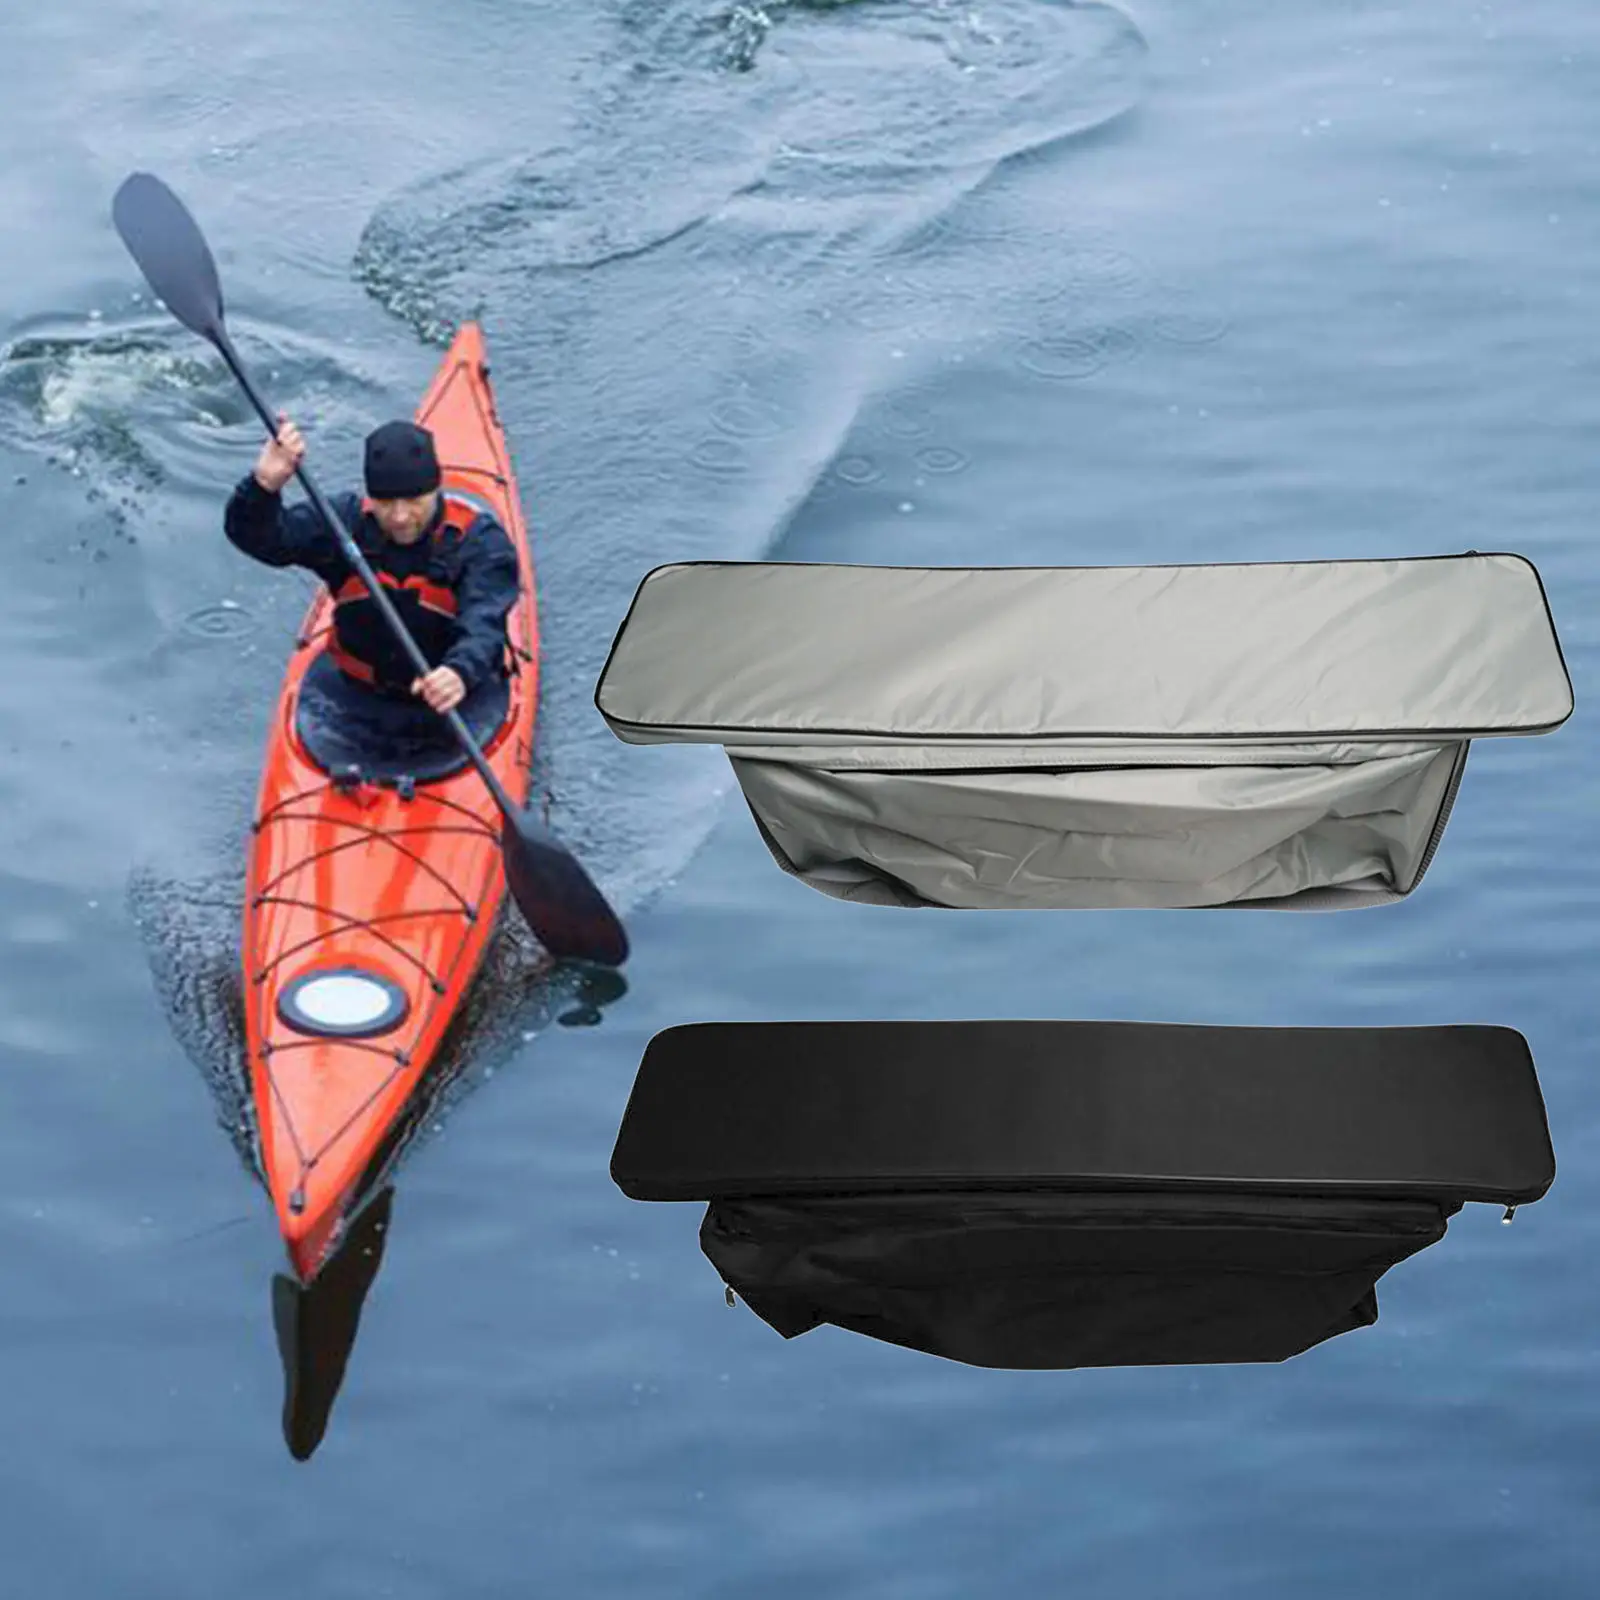 Portable Canvas Kayak Storage Bag Large Capacity Travel Seat Bag Organizer Accessories